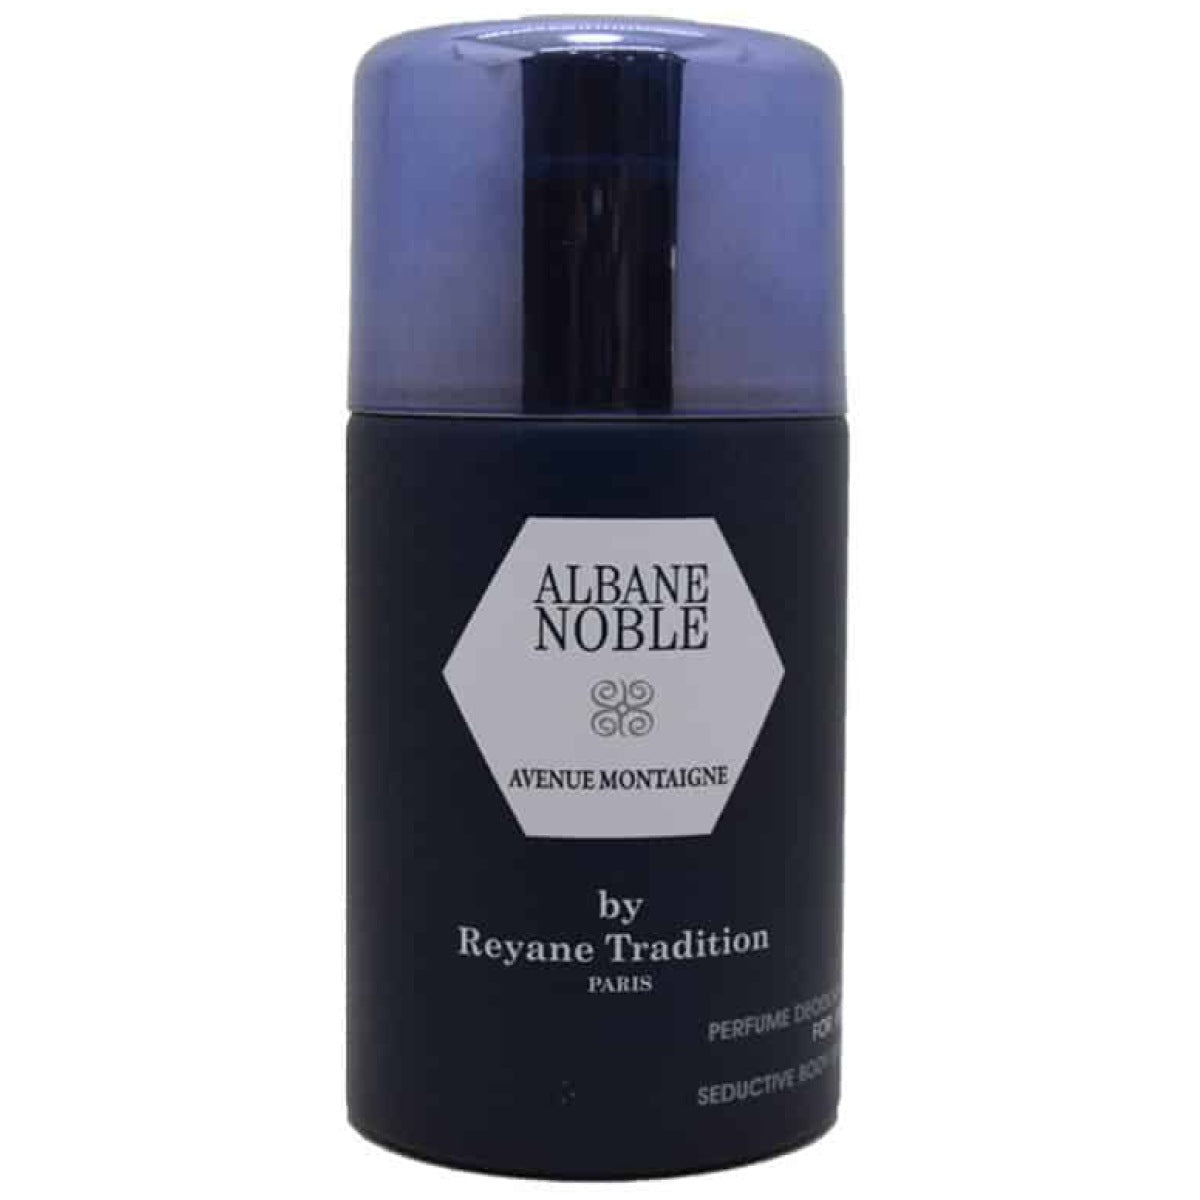 Reyane Tradition Paris Albane Noble Avenue Montaigne Deodorant Perfume For Men 250ml